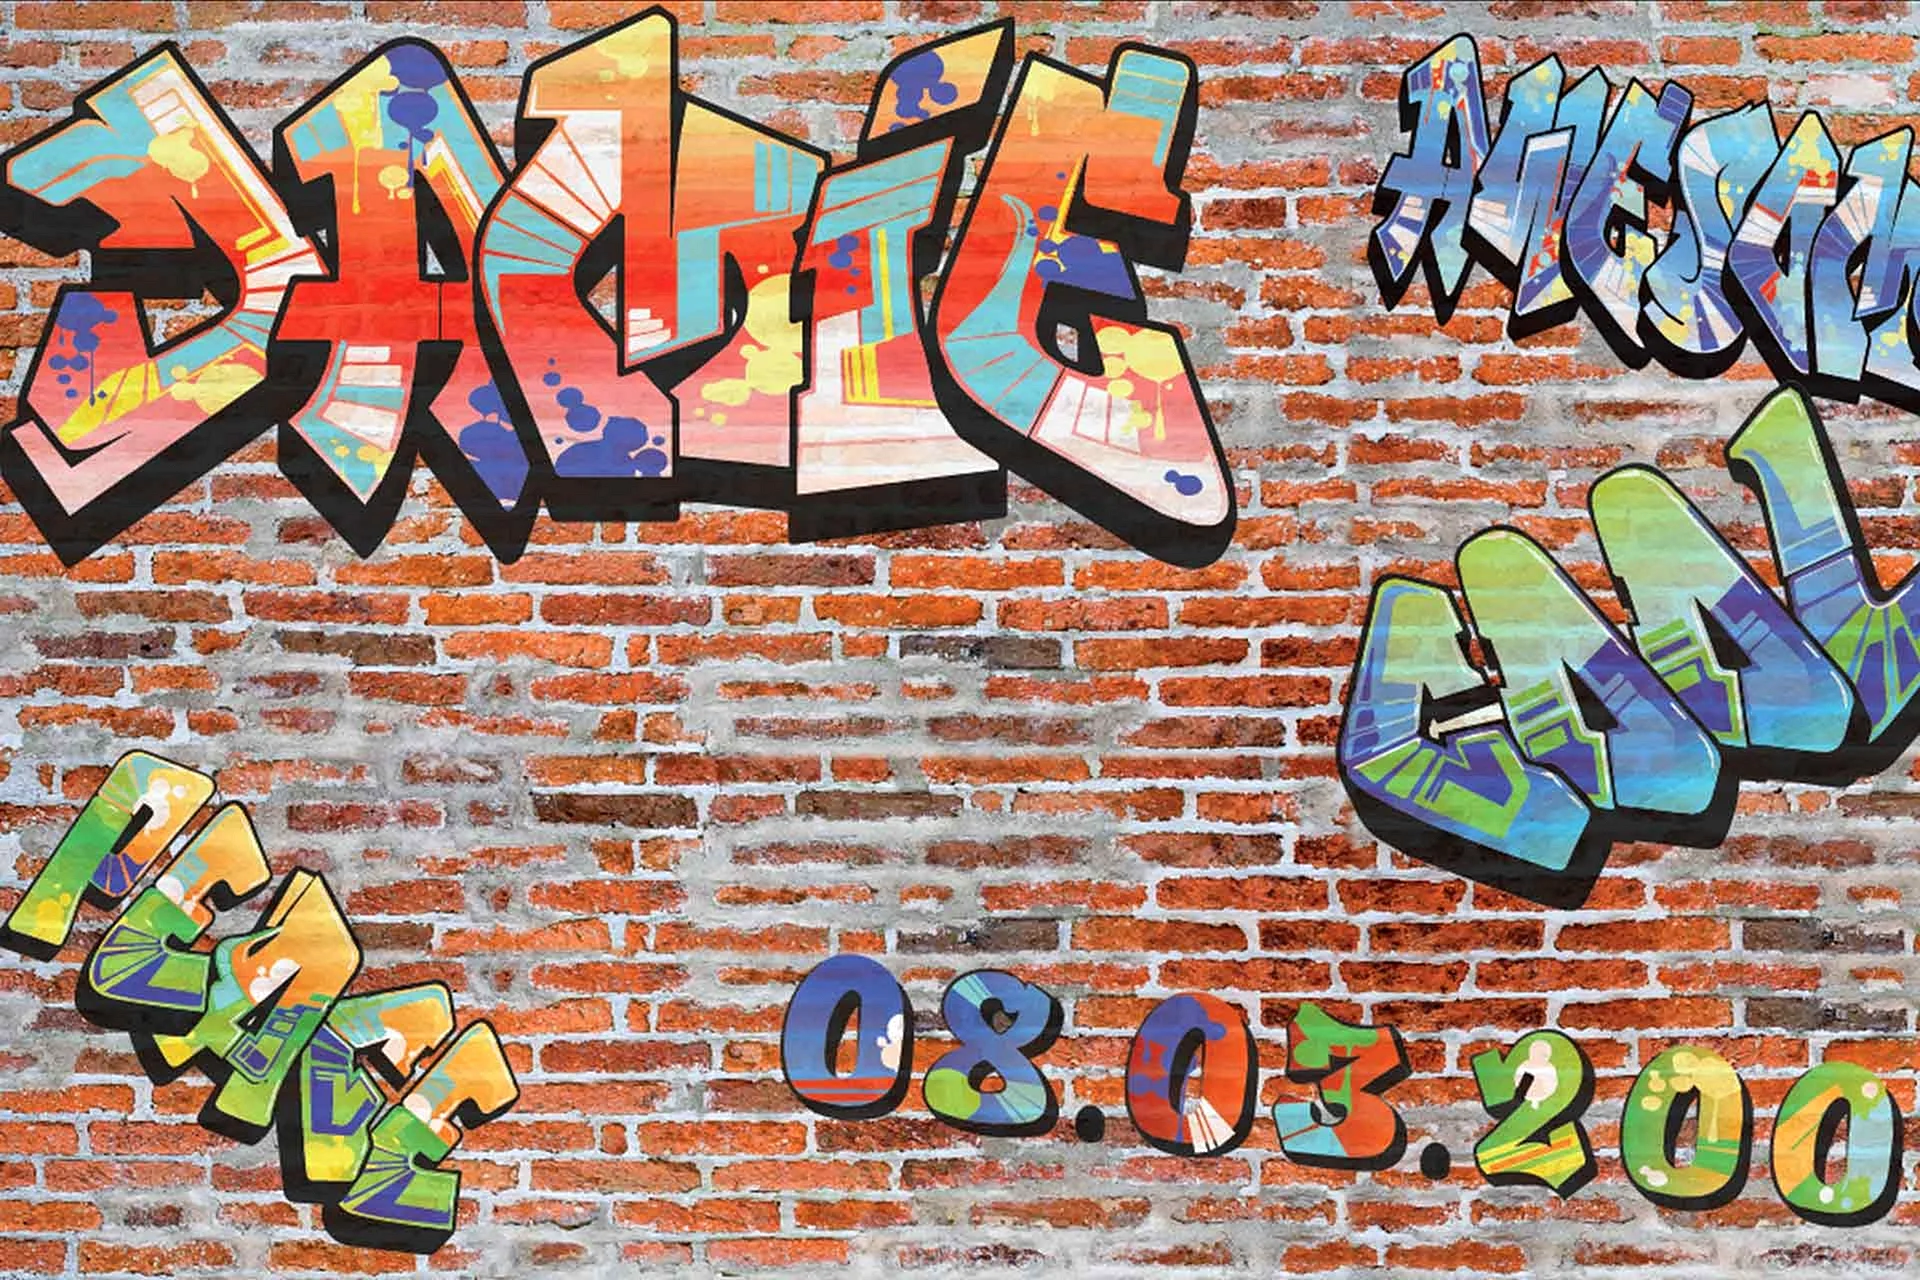 Graffiti Brick Wall Wallpaper